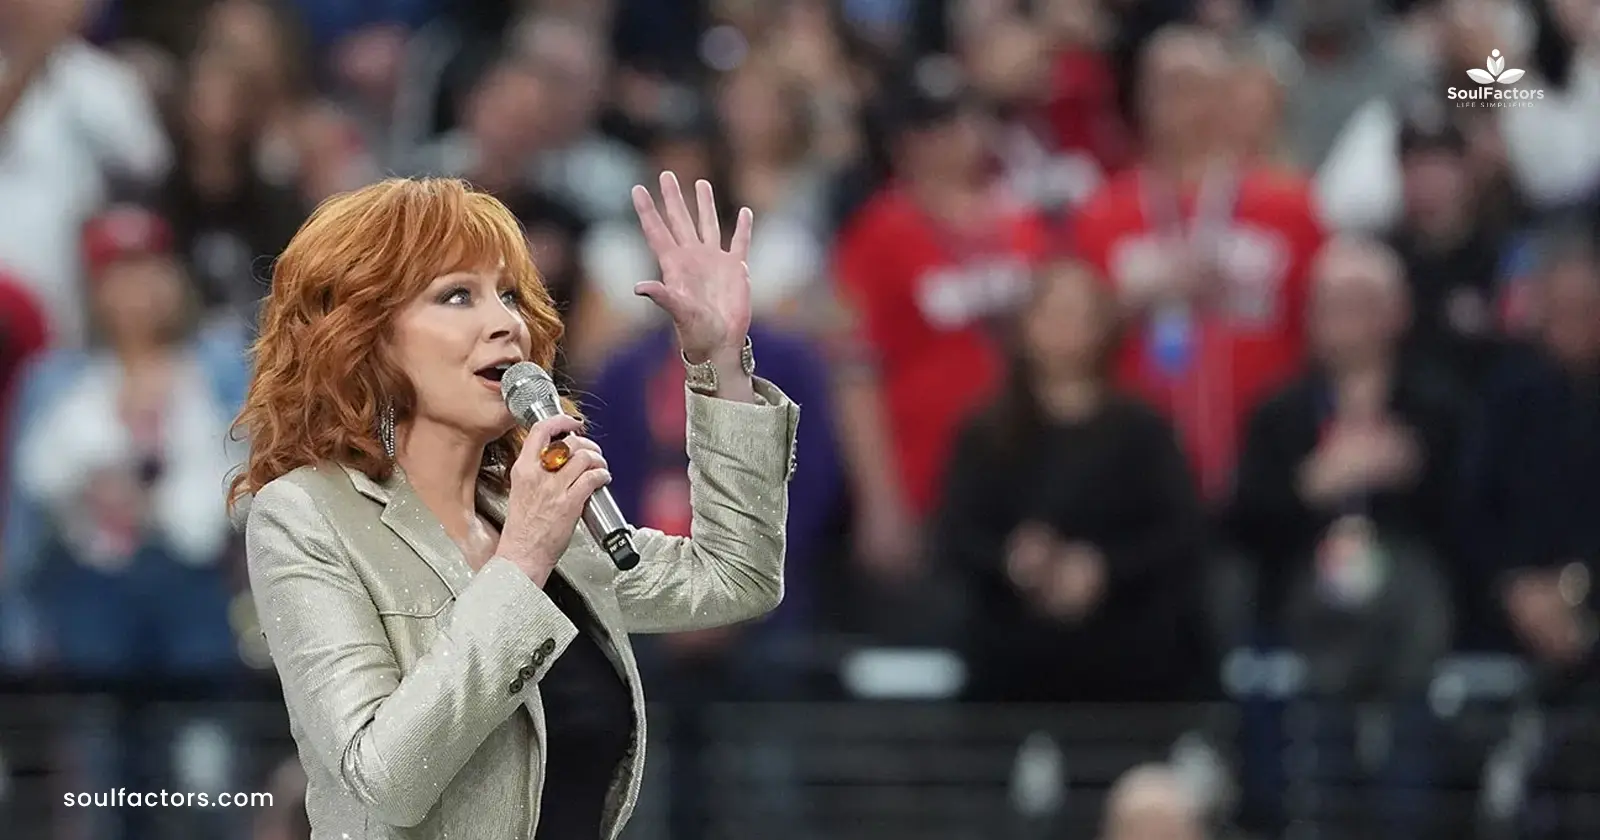 Reba McEntire sings Super Bowl anthem